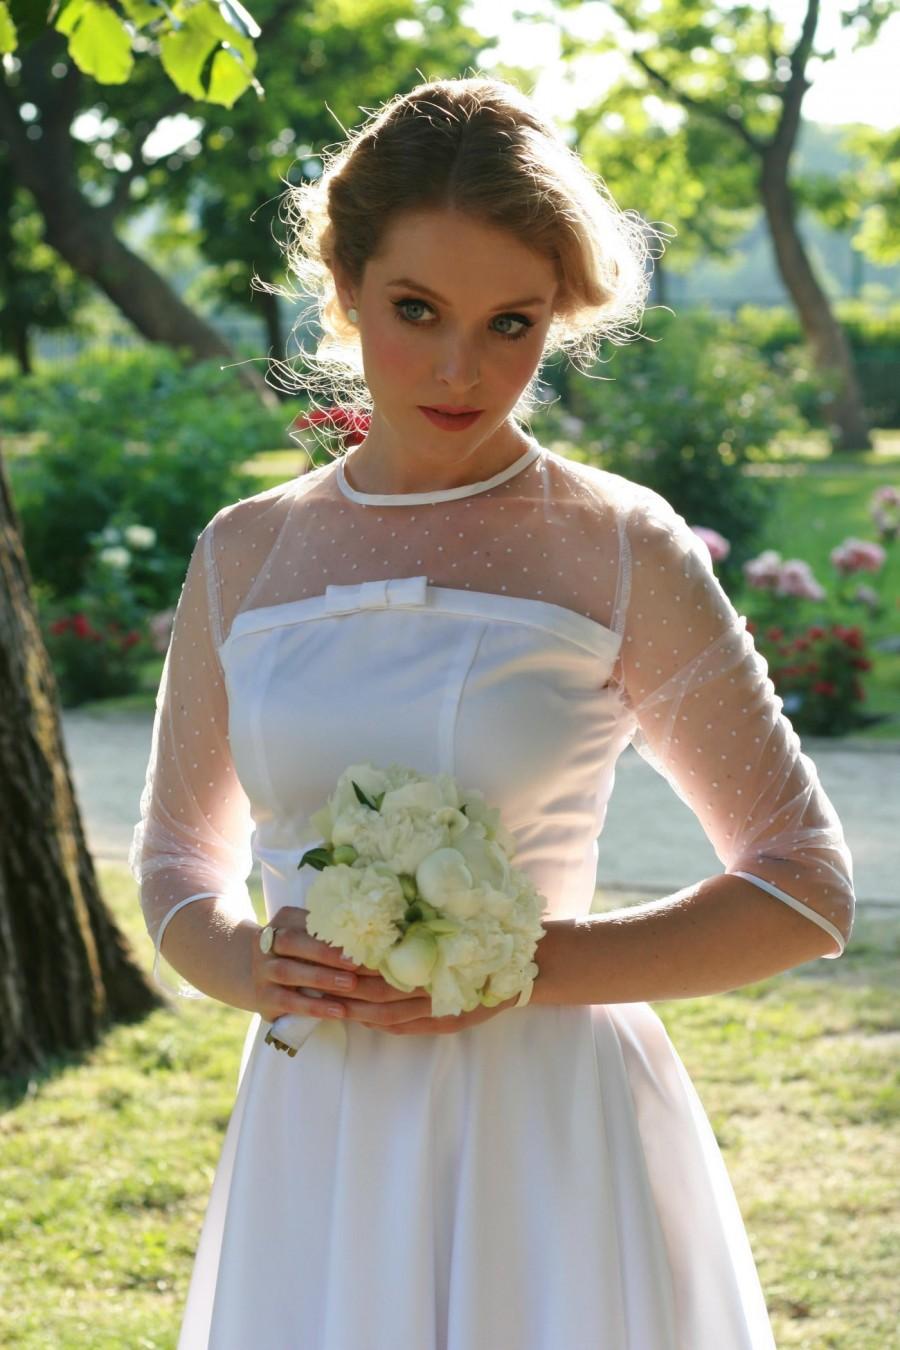 Hochzeit - Lana Wedding Dress: vintage style / pin-up / rockabilly bride dress by TiCCi Rockabilly Clothing